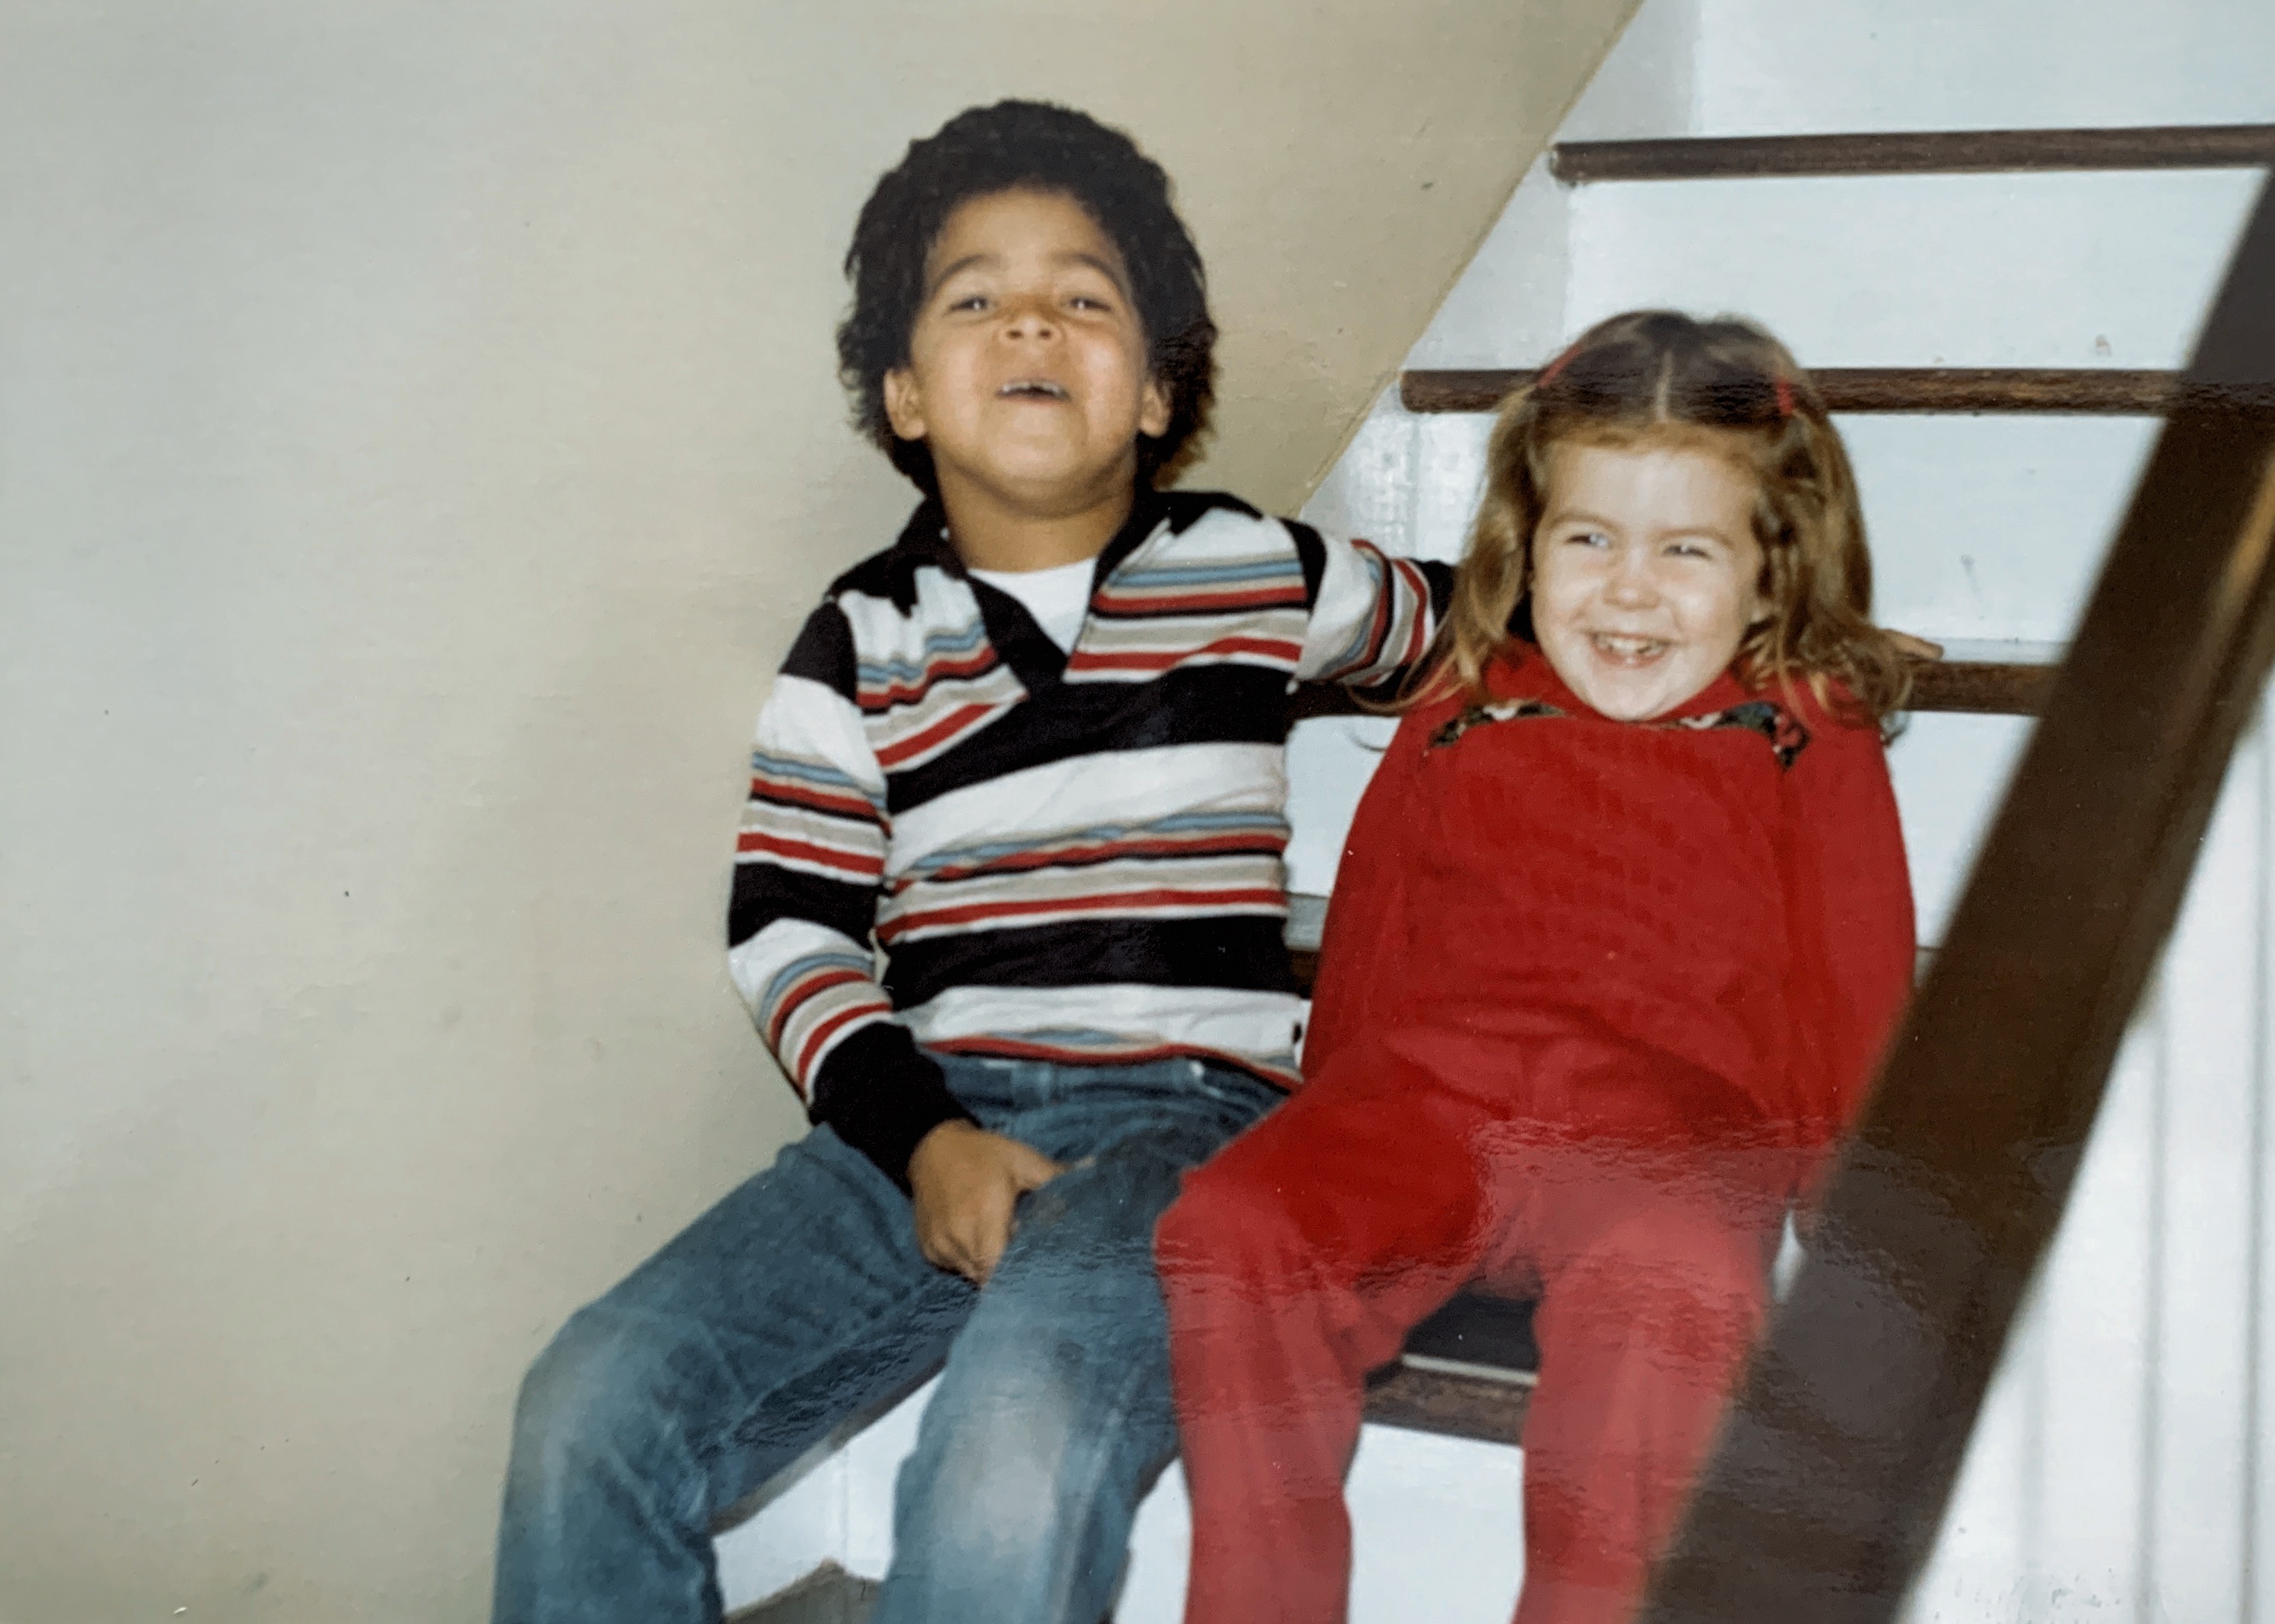 Jason and Lori at Janie’s house 1980